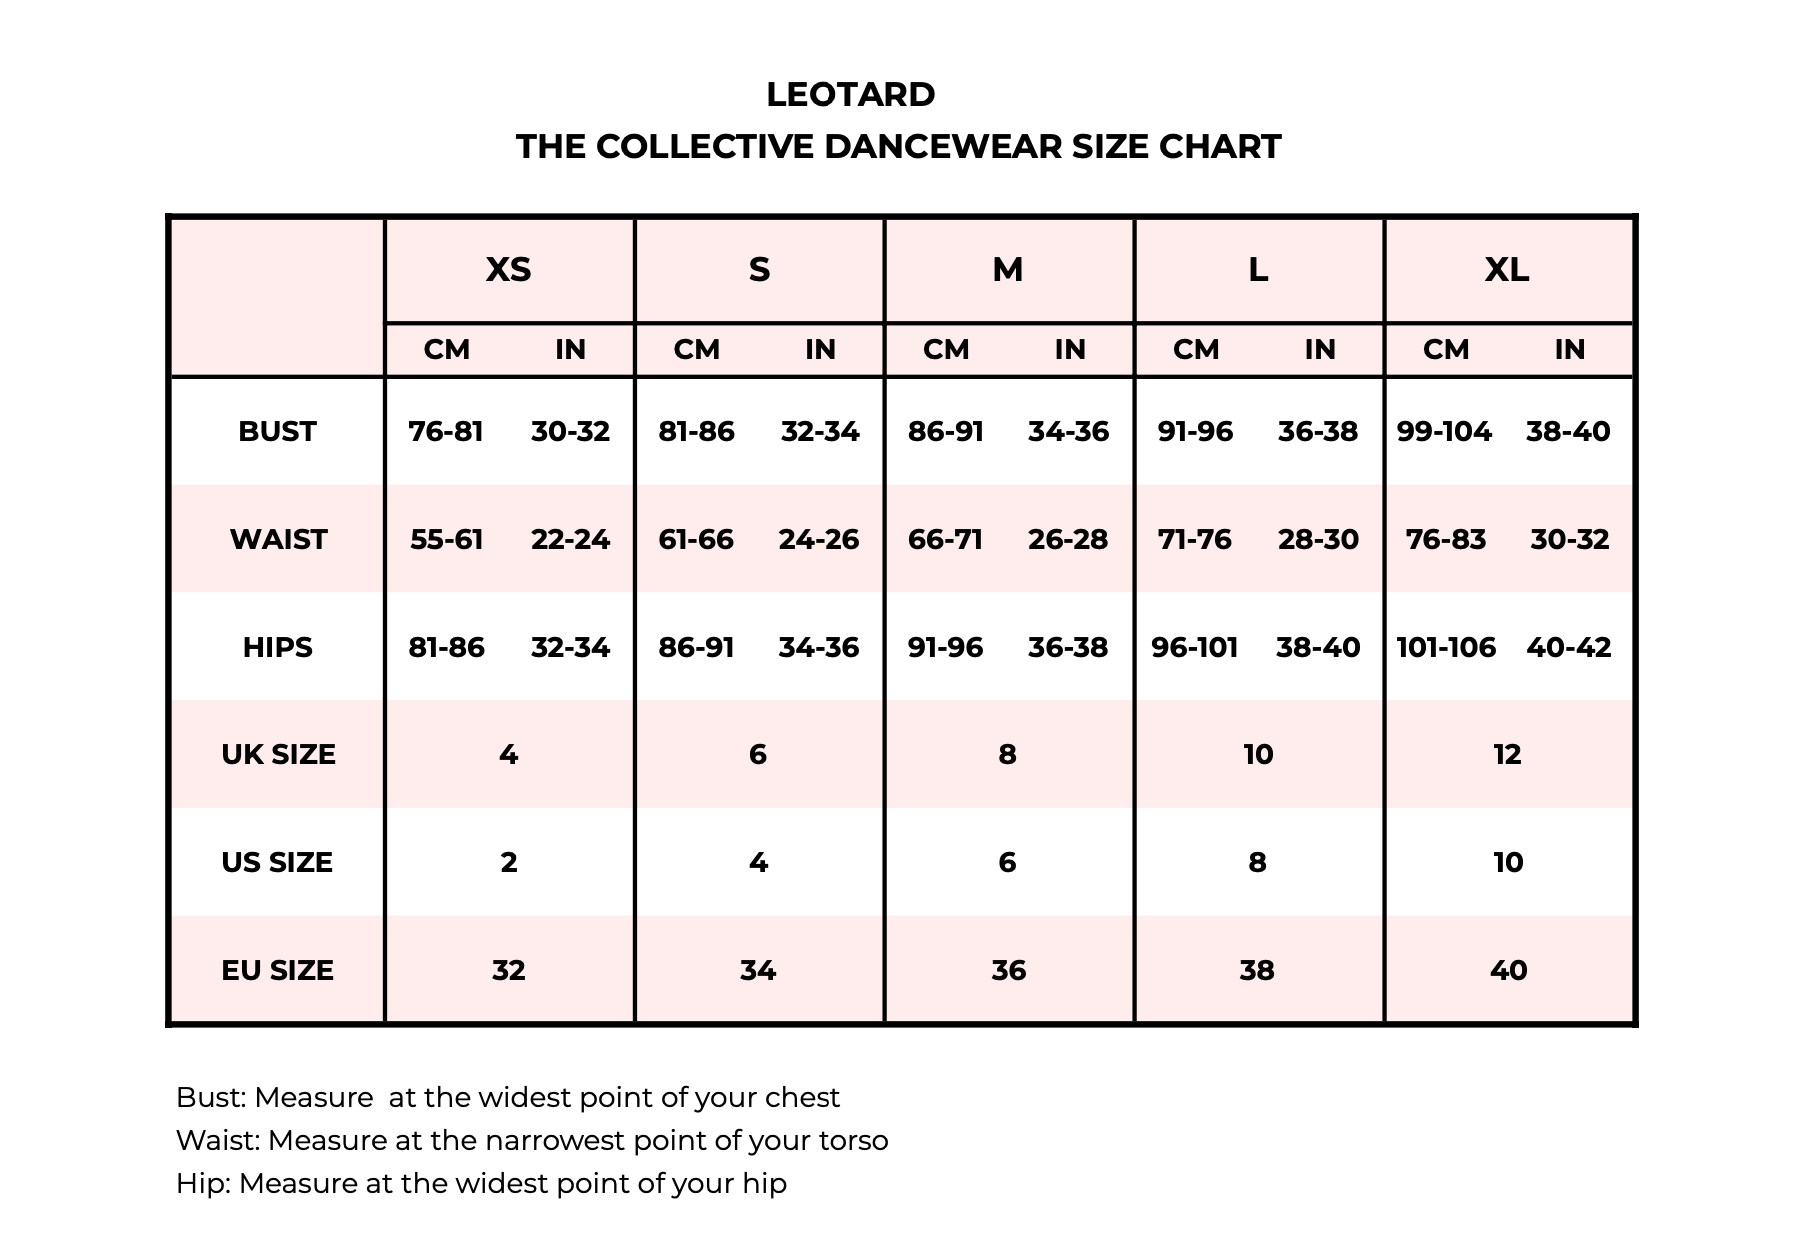 Generic Leotard Size Chart The Collective Dancewear